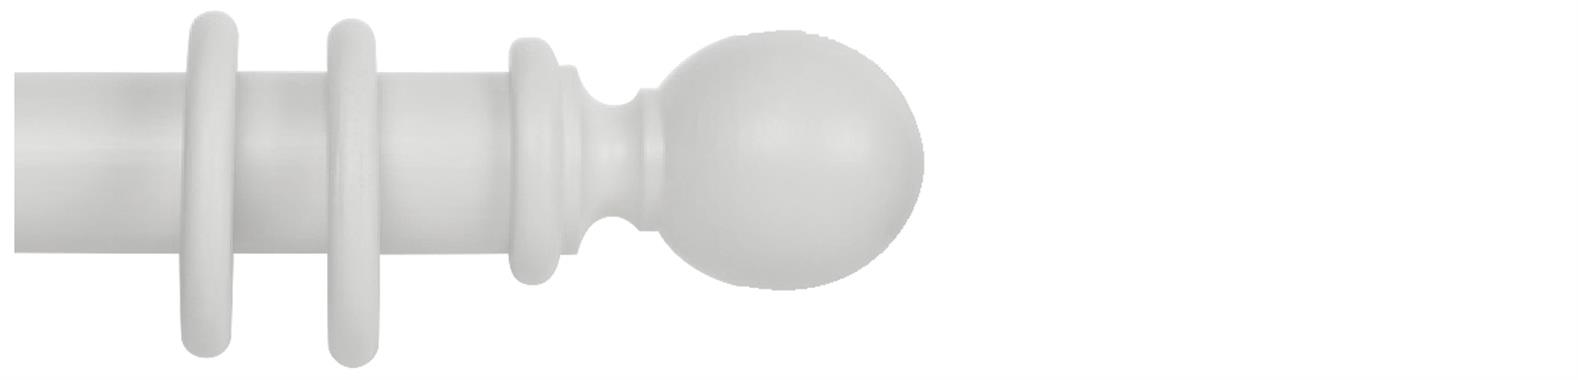 Cameron Fuller 35mm Pole White Ball